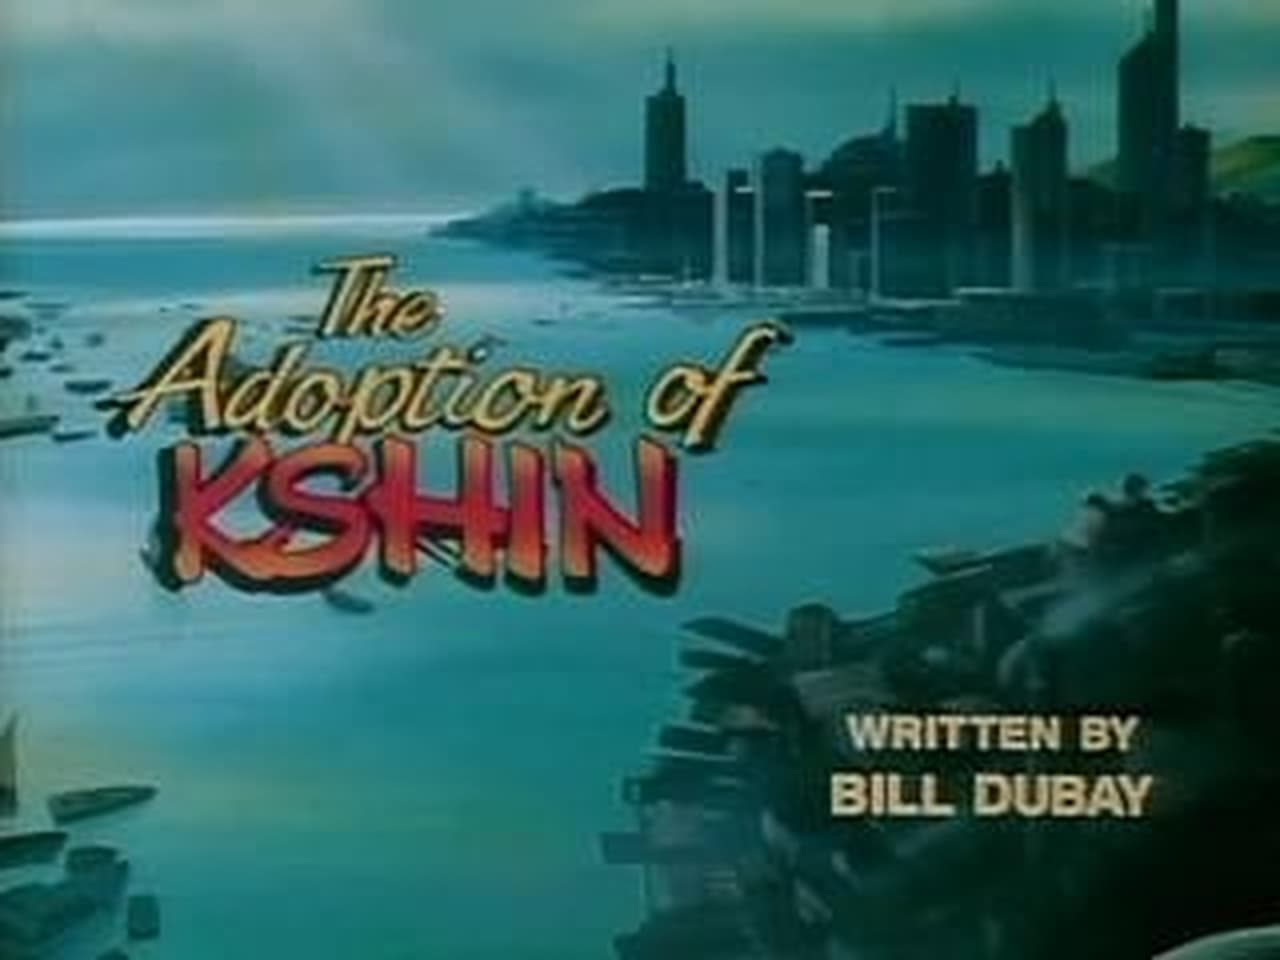 The Adoption of Kshin